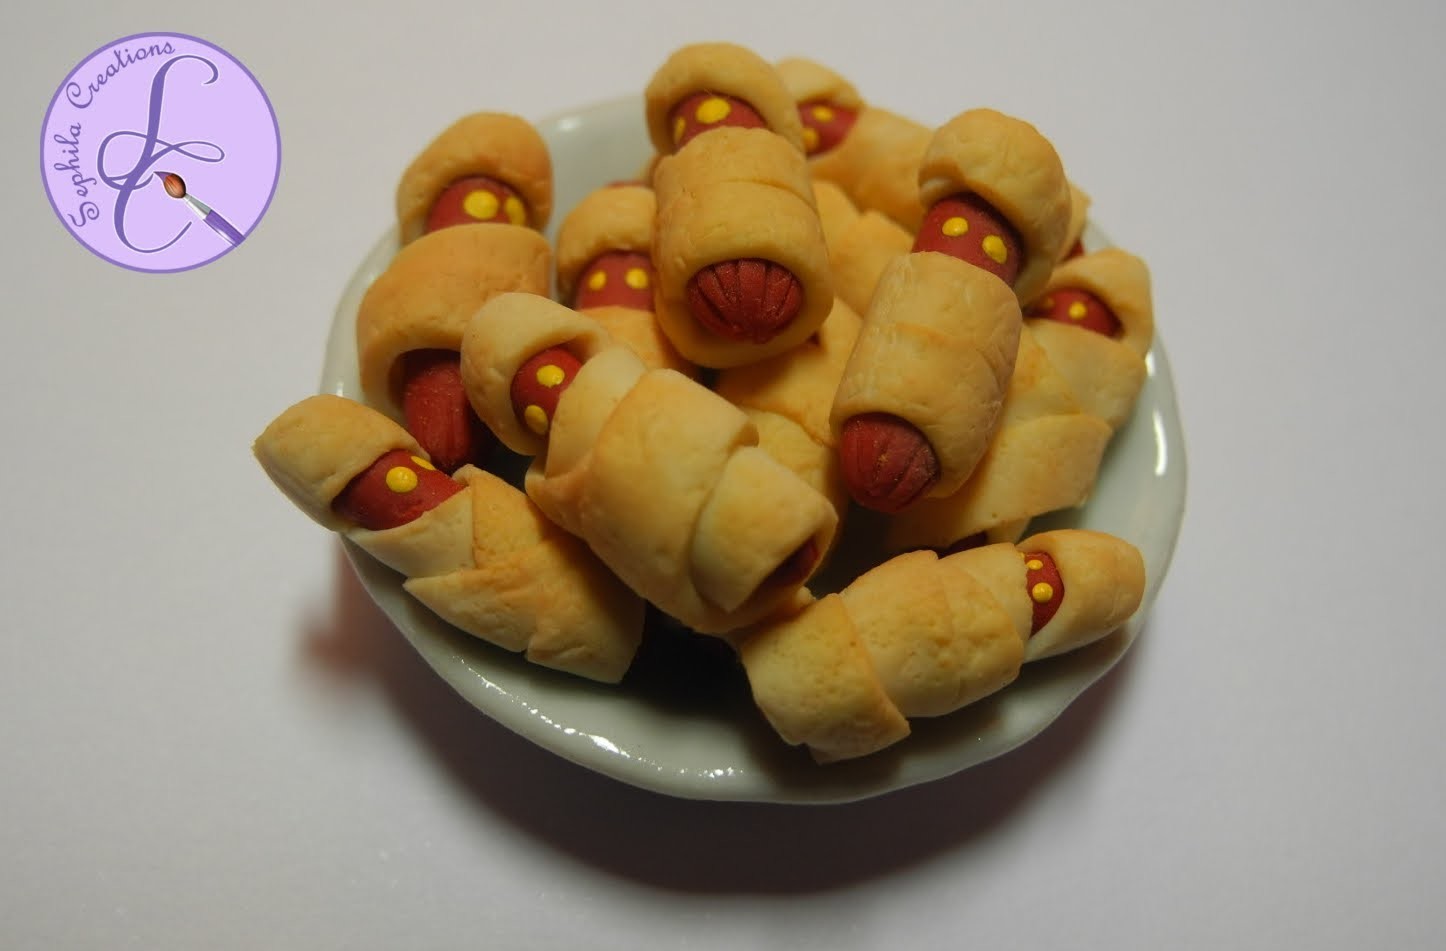 Tutorial: Hot-Dog mummia in fimo per Halloween (hot-dog mummies in polymer clay) [eng-sub]